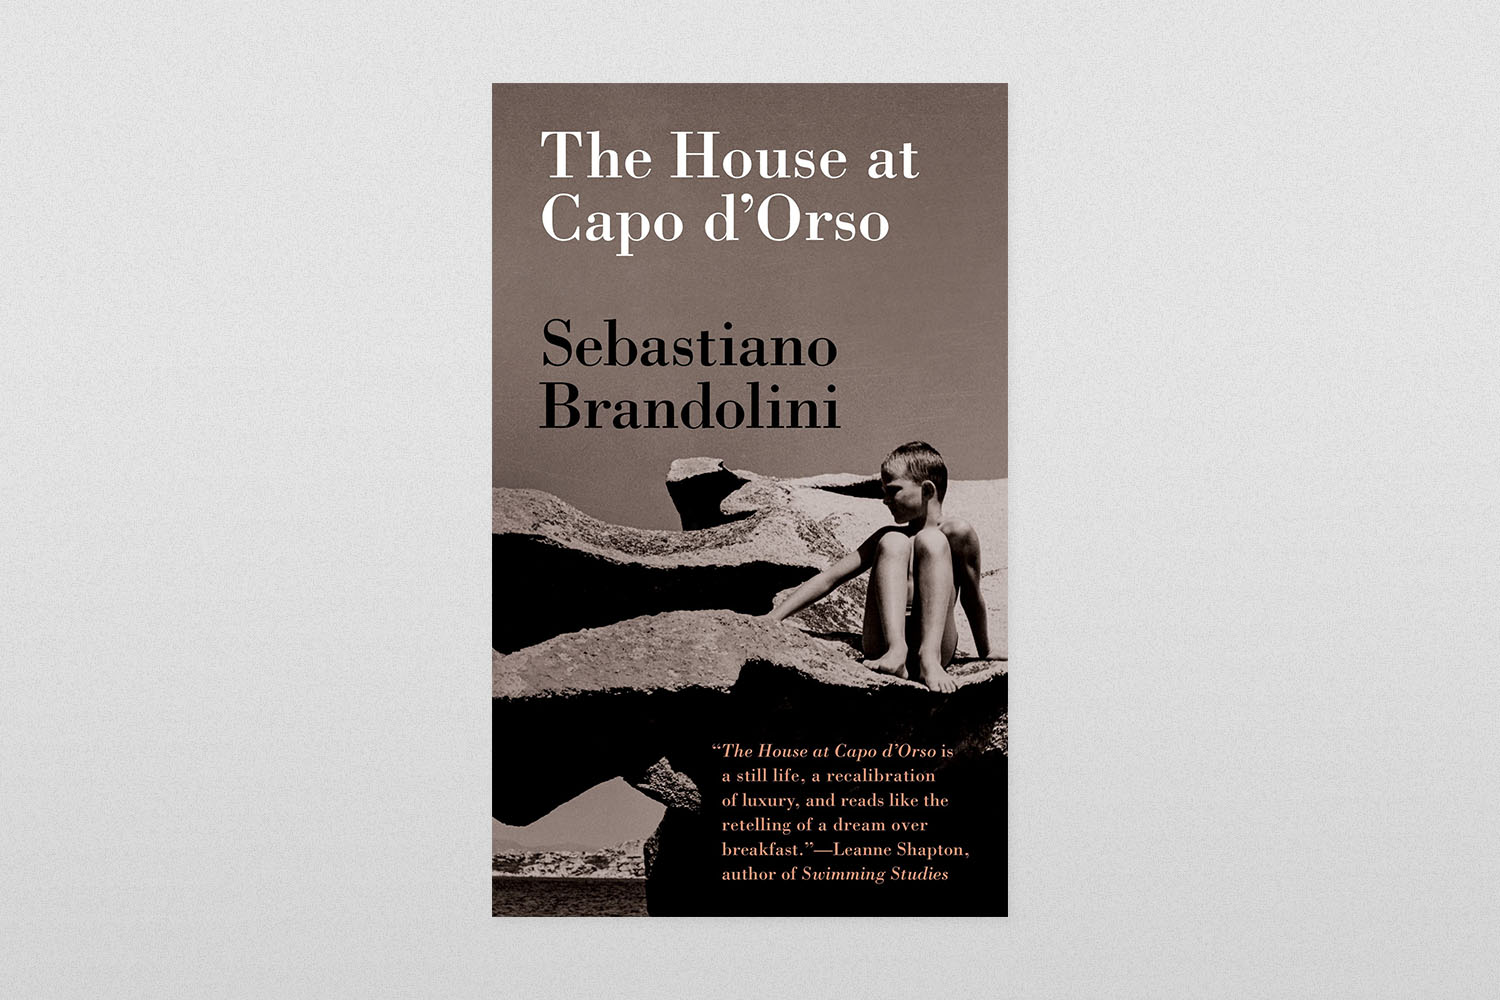 The House at Capo d'Orso by Sebastiano Brandolini